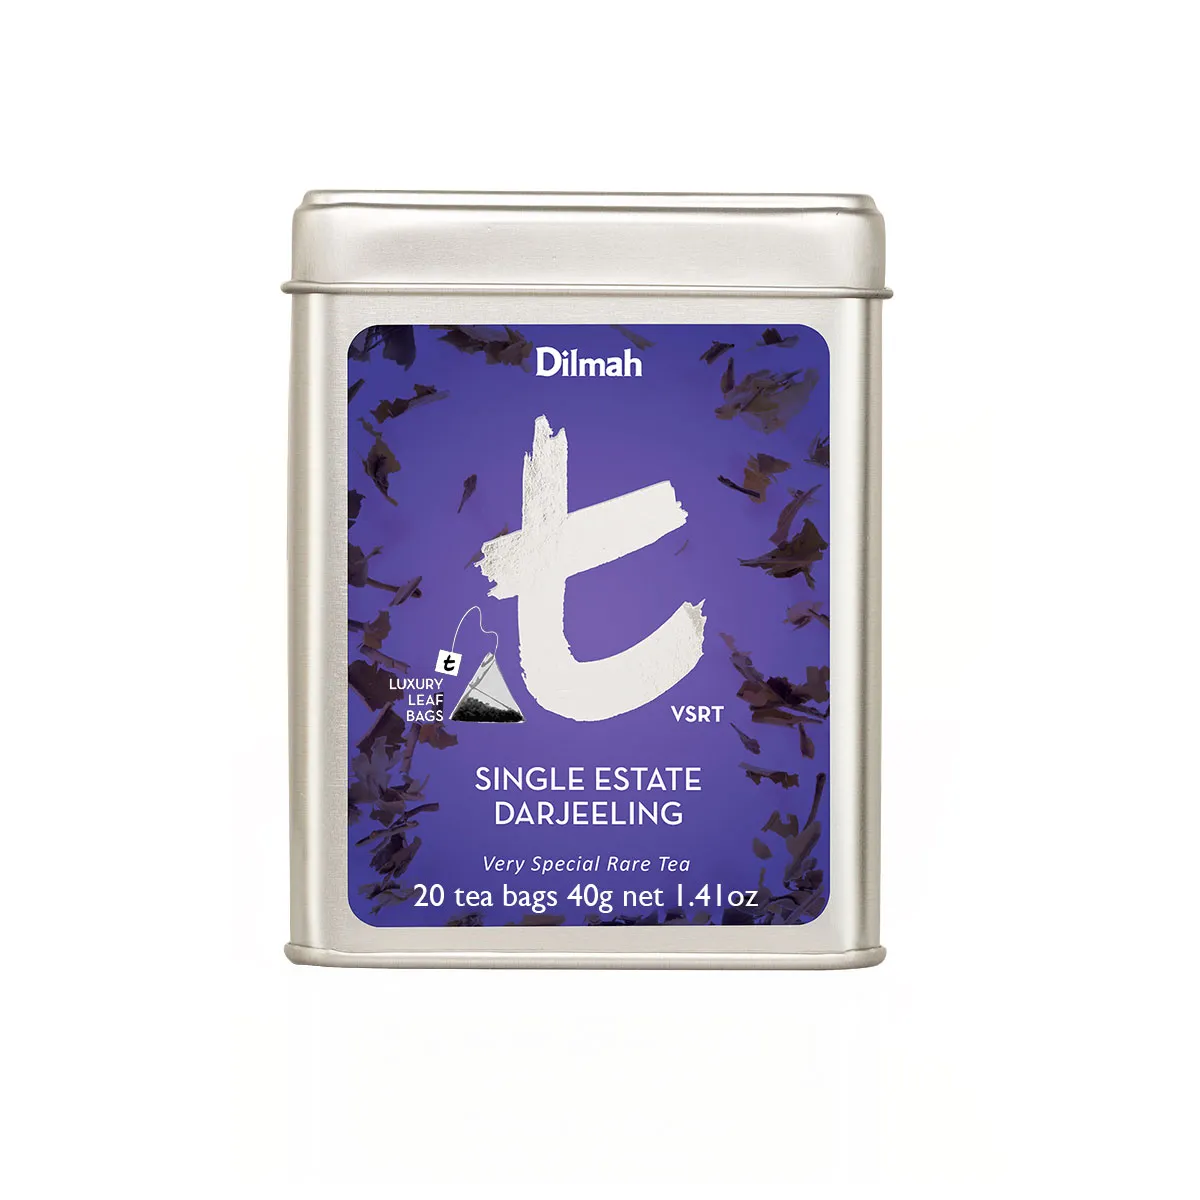 20 tea bags of Single Estate Darjeeling Tea in tin